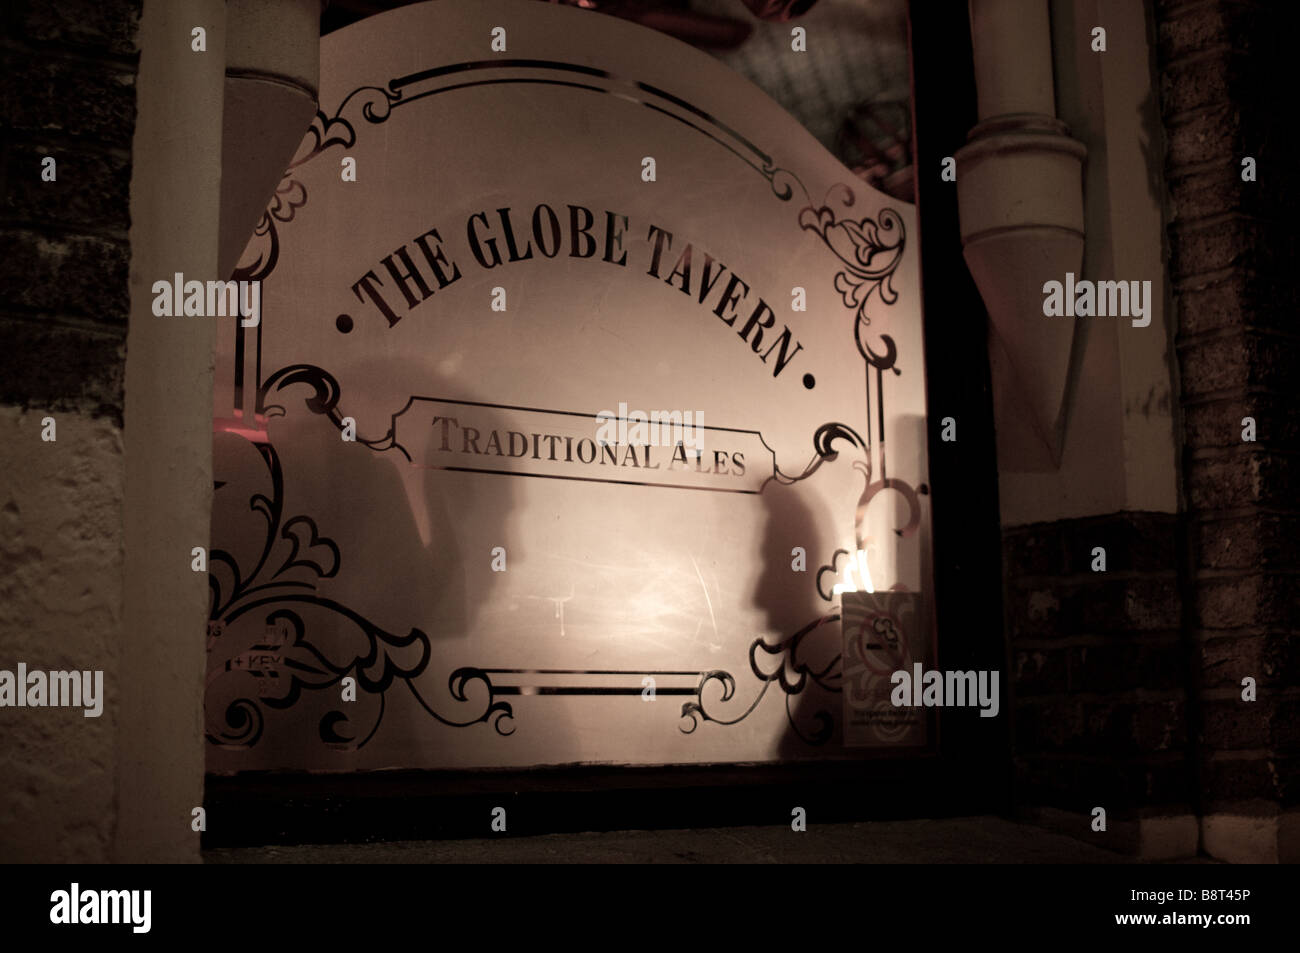 Two men having a conversation in the Glove Tavern pub Borough Market London at night Stock Photo